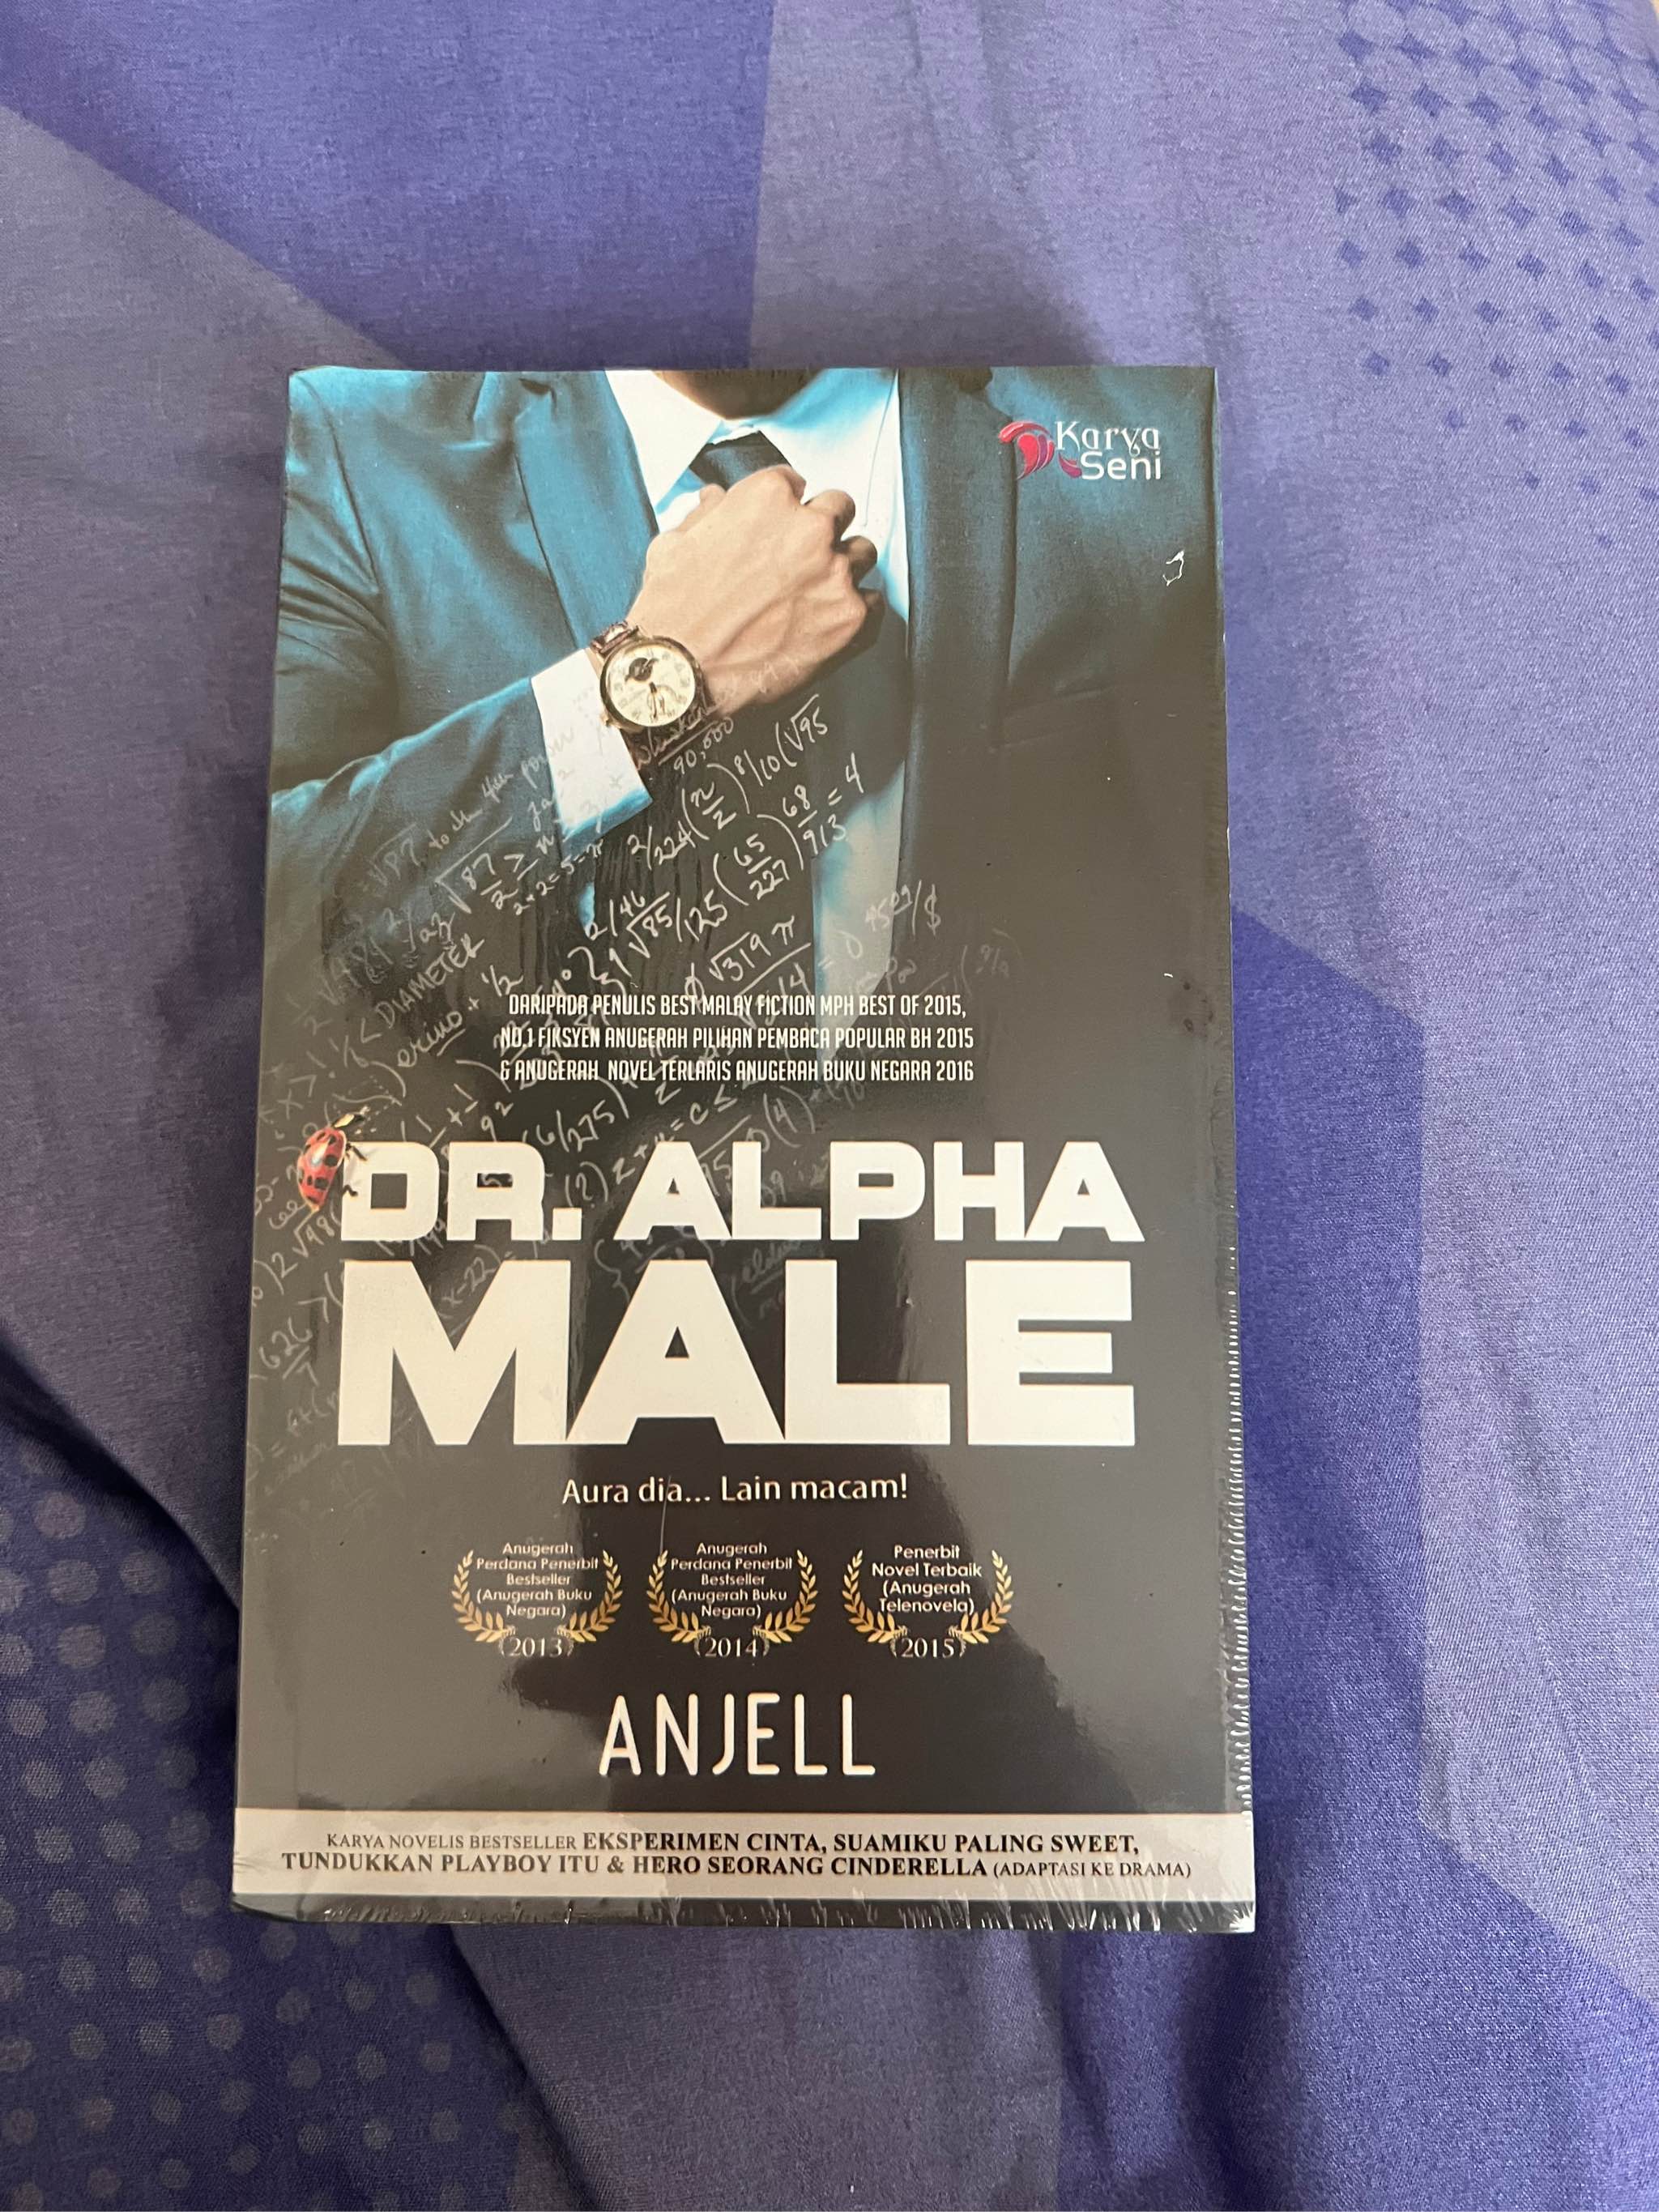 Dr alpha male